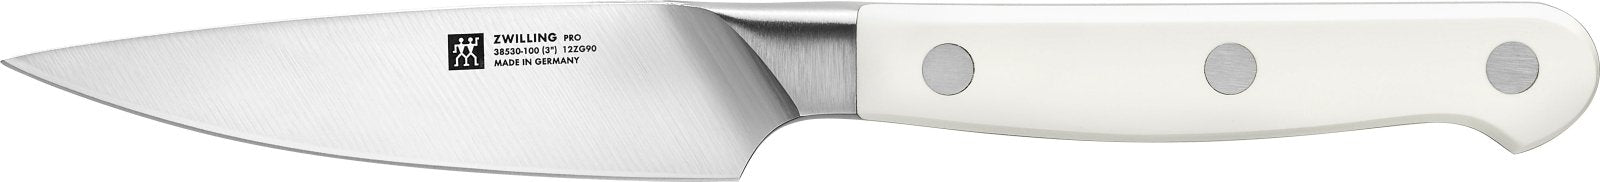 Zwilling Pro LeBlanc Knife 7 Piece Block Set - 1024104 - The Cotswold Knife Company